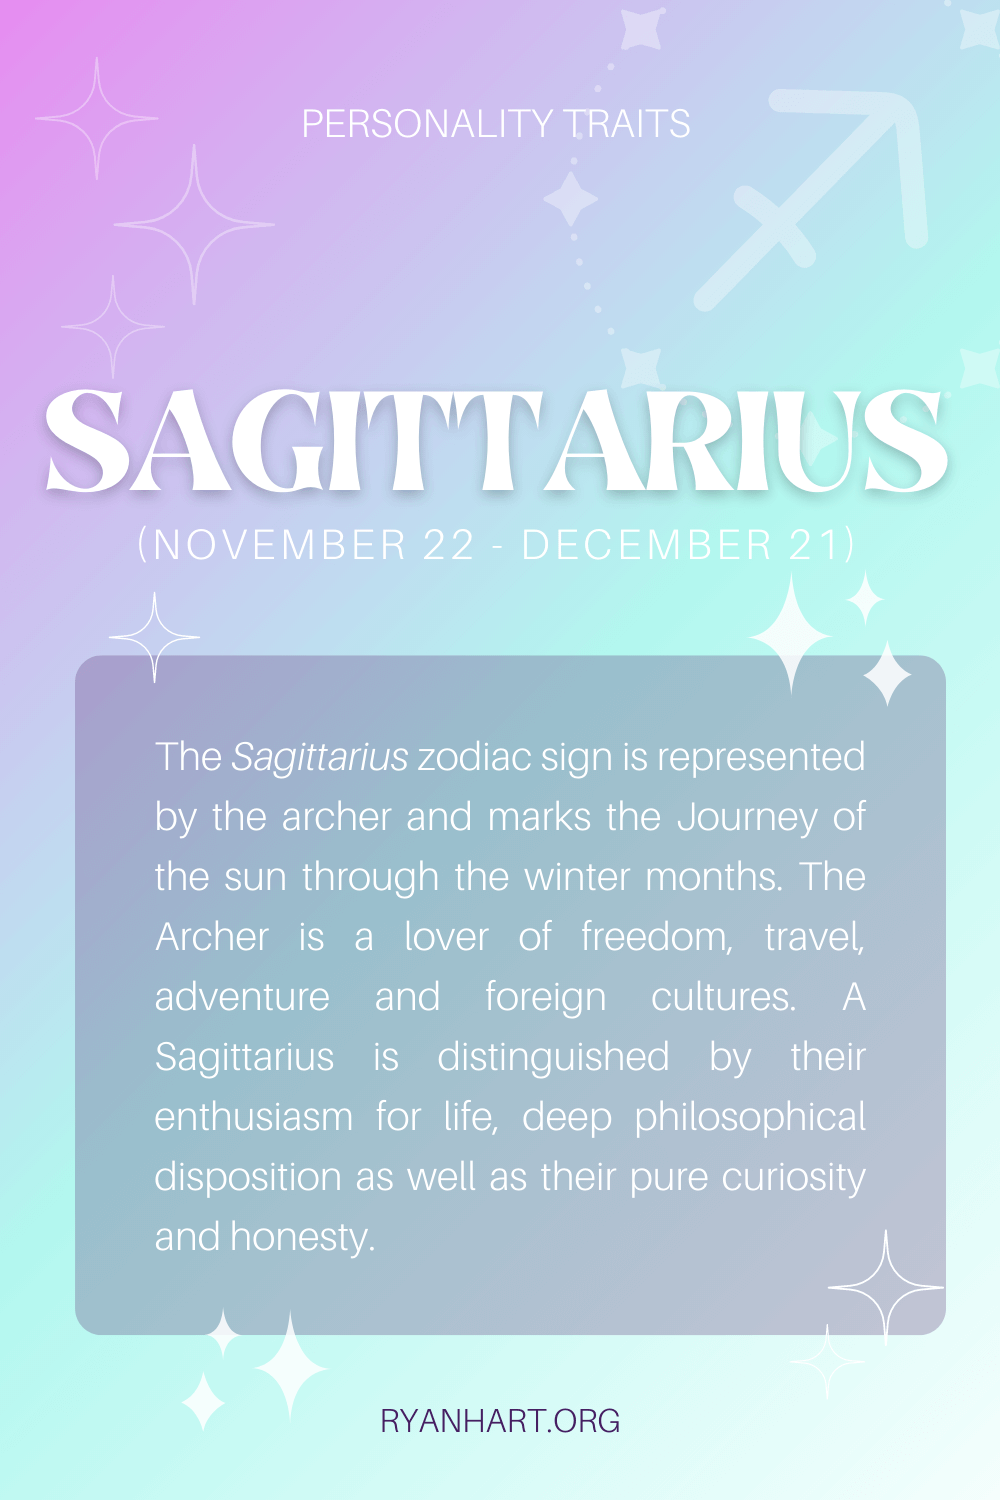 9 Sagittarius Characteristics